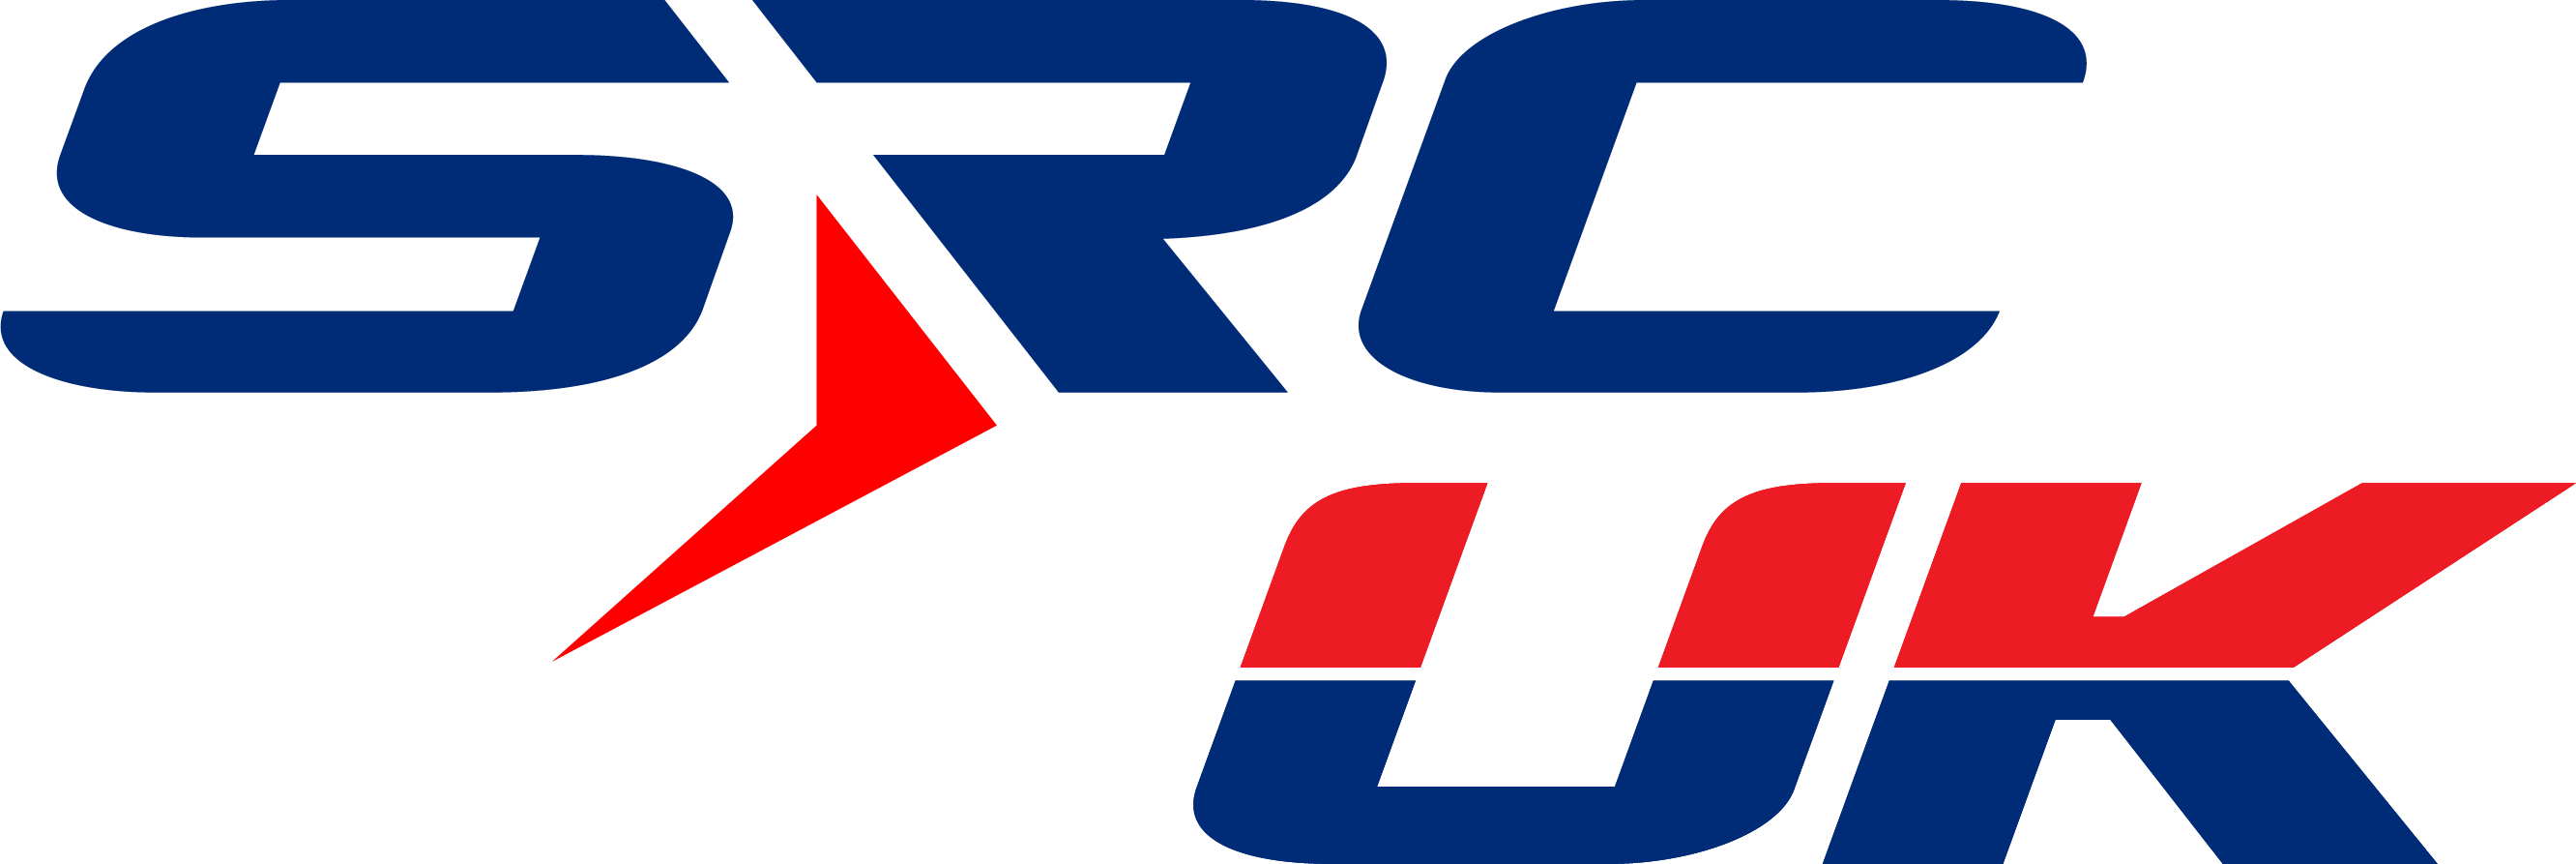 SRC UK company logo